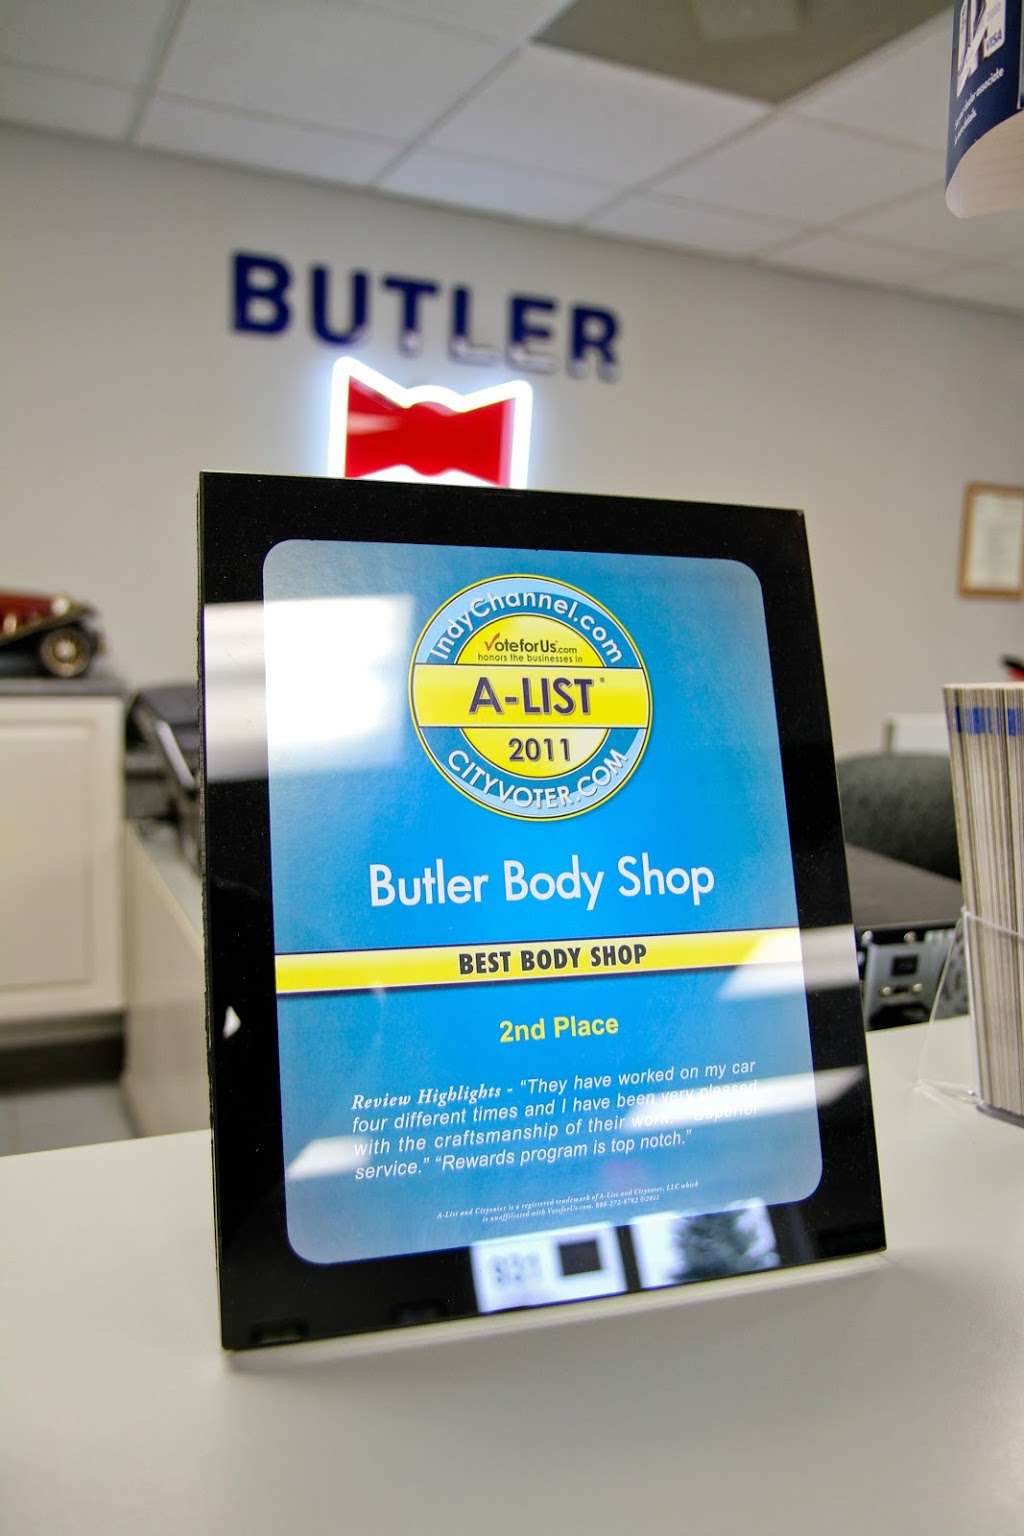 Butler Auto Collision Center | 931 N Rangeline Rd # X, Carmel, IN 46032 | Phone: (317) 848-2471